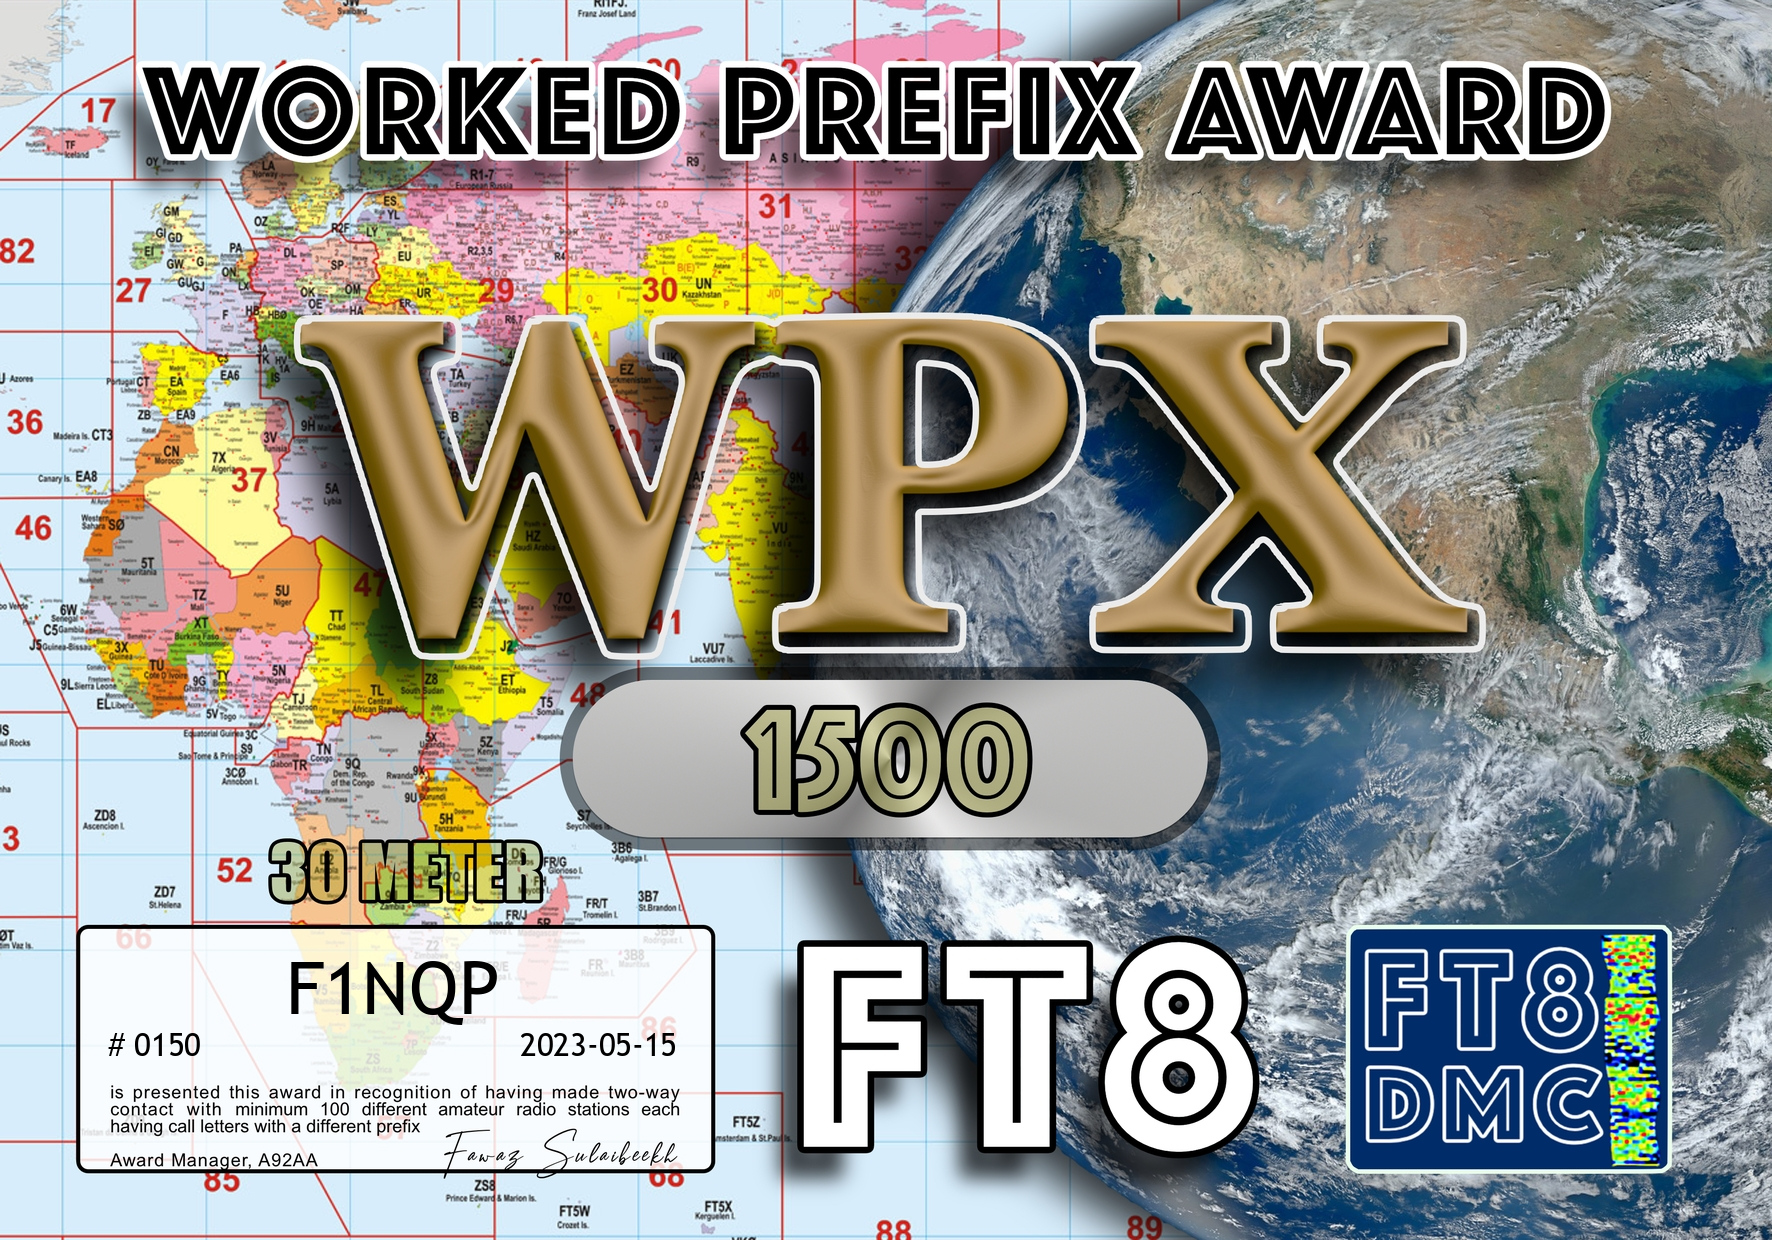 F1NQP-WPX30-1500_FT8DMC.jpg